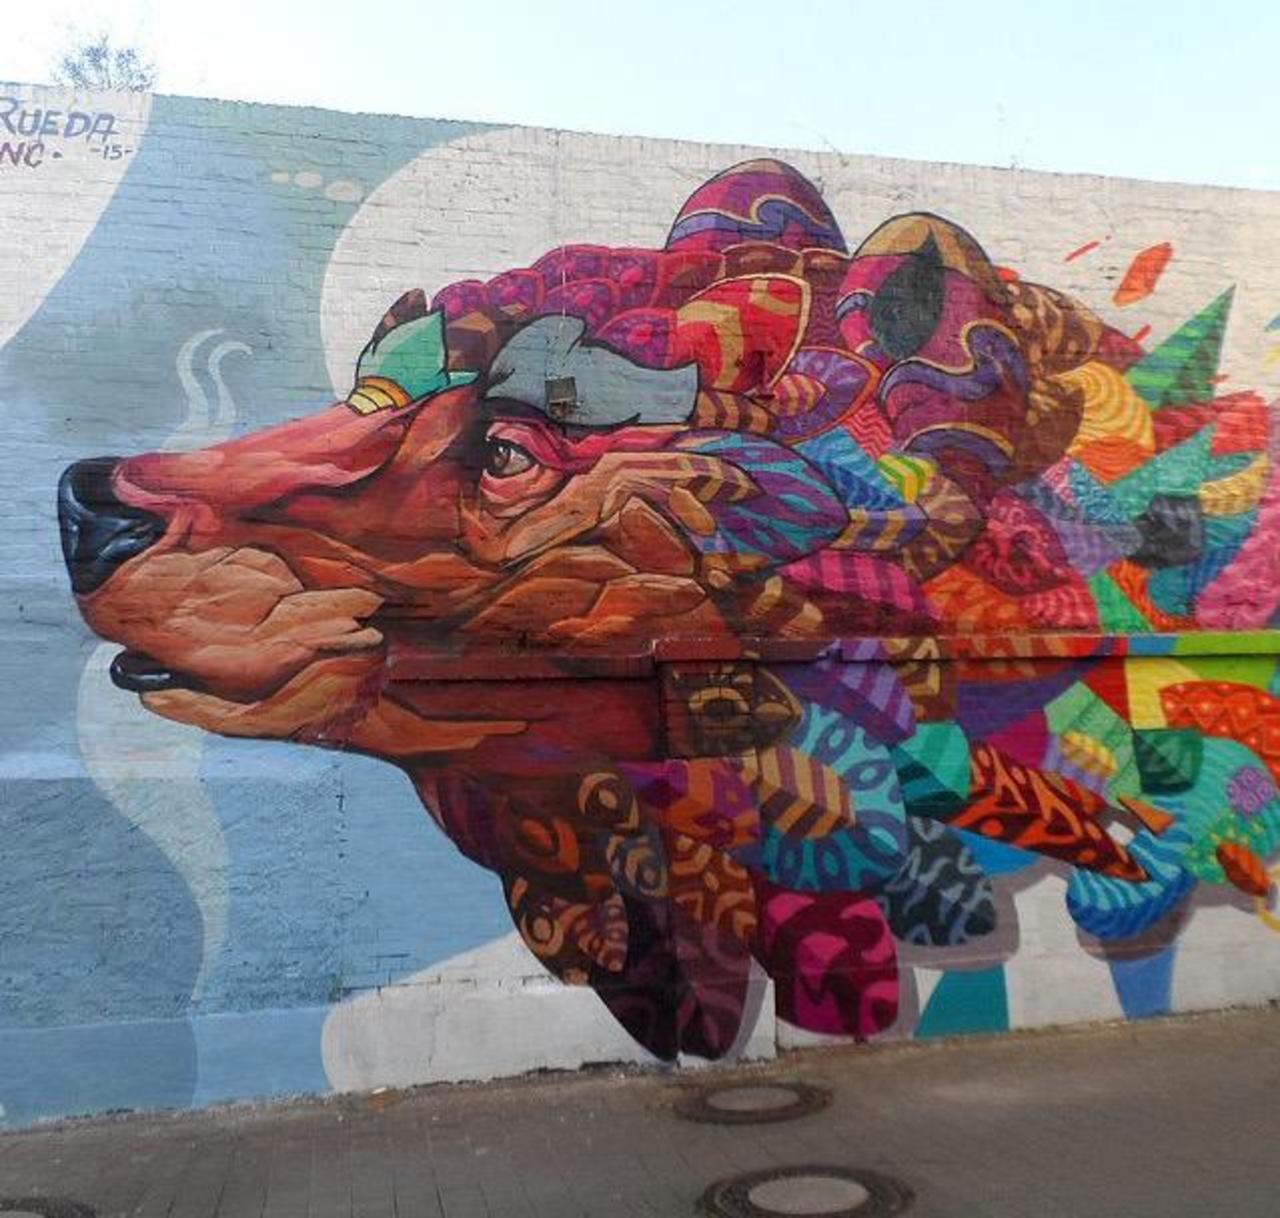 Farid Rueda Street Art 

#art #graffiti #mural #streetart http://t.co/nt3dYmqxxo